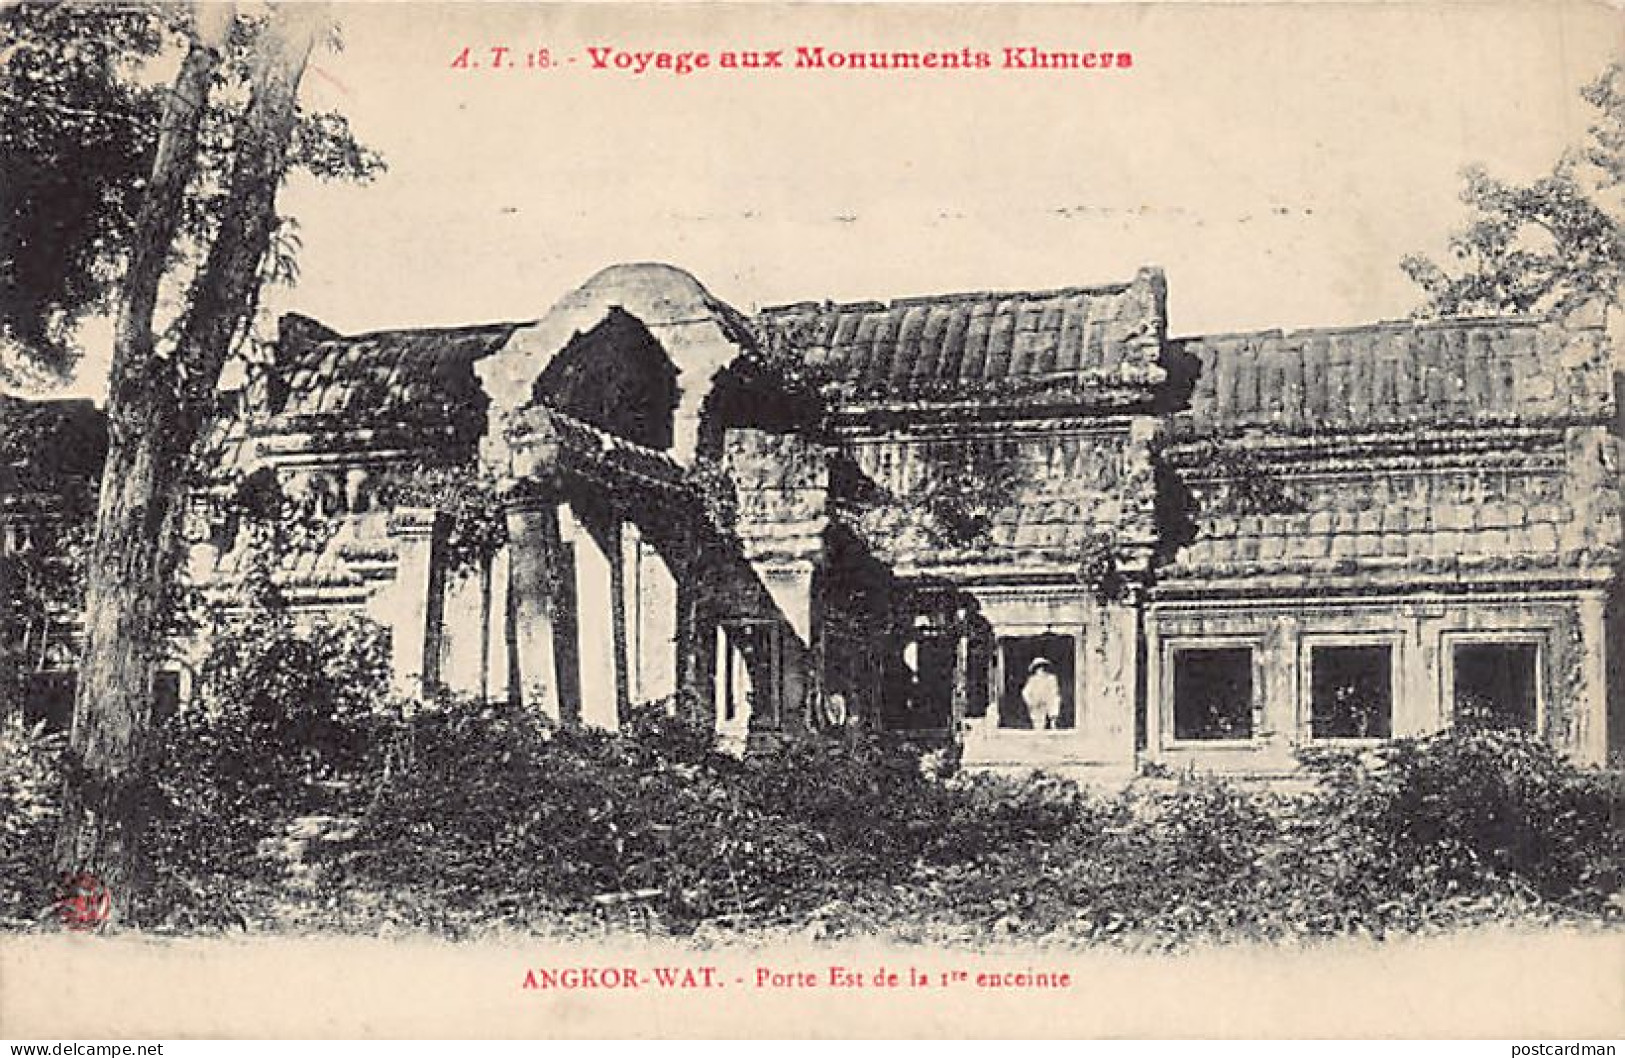 Cambodge - Voyage Aux Monuments Khmers - ANGKOR VAT - Porte Est - Ed. A. T. 18 - Cambodge